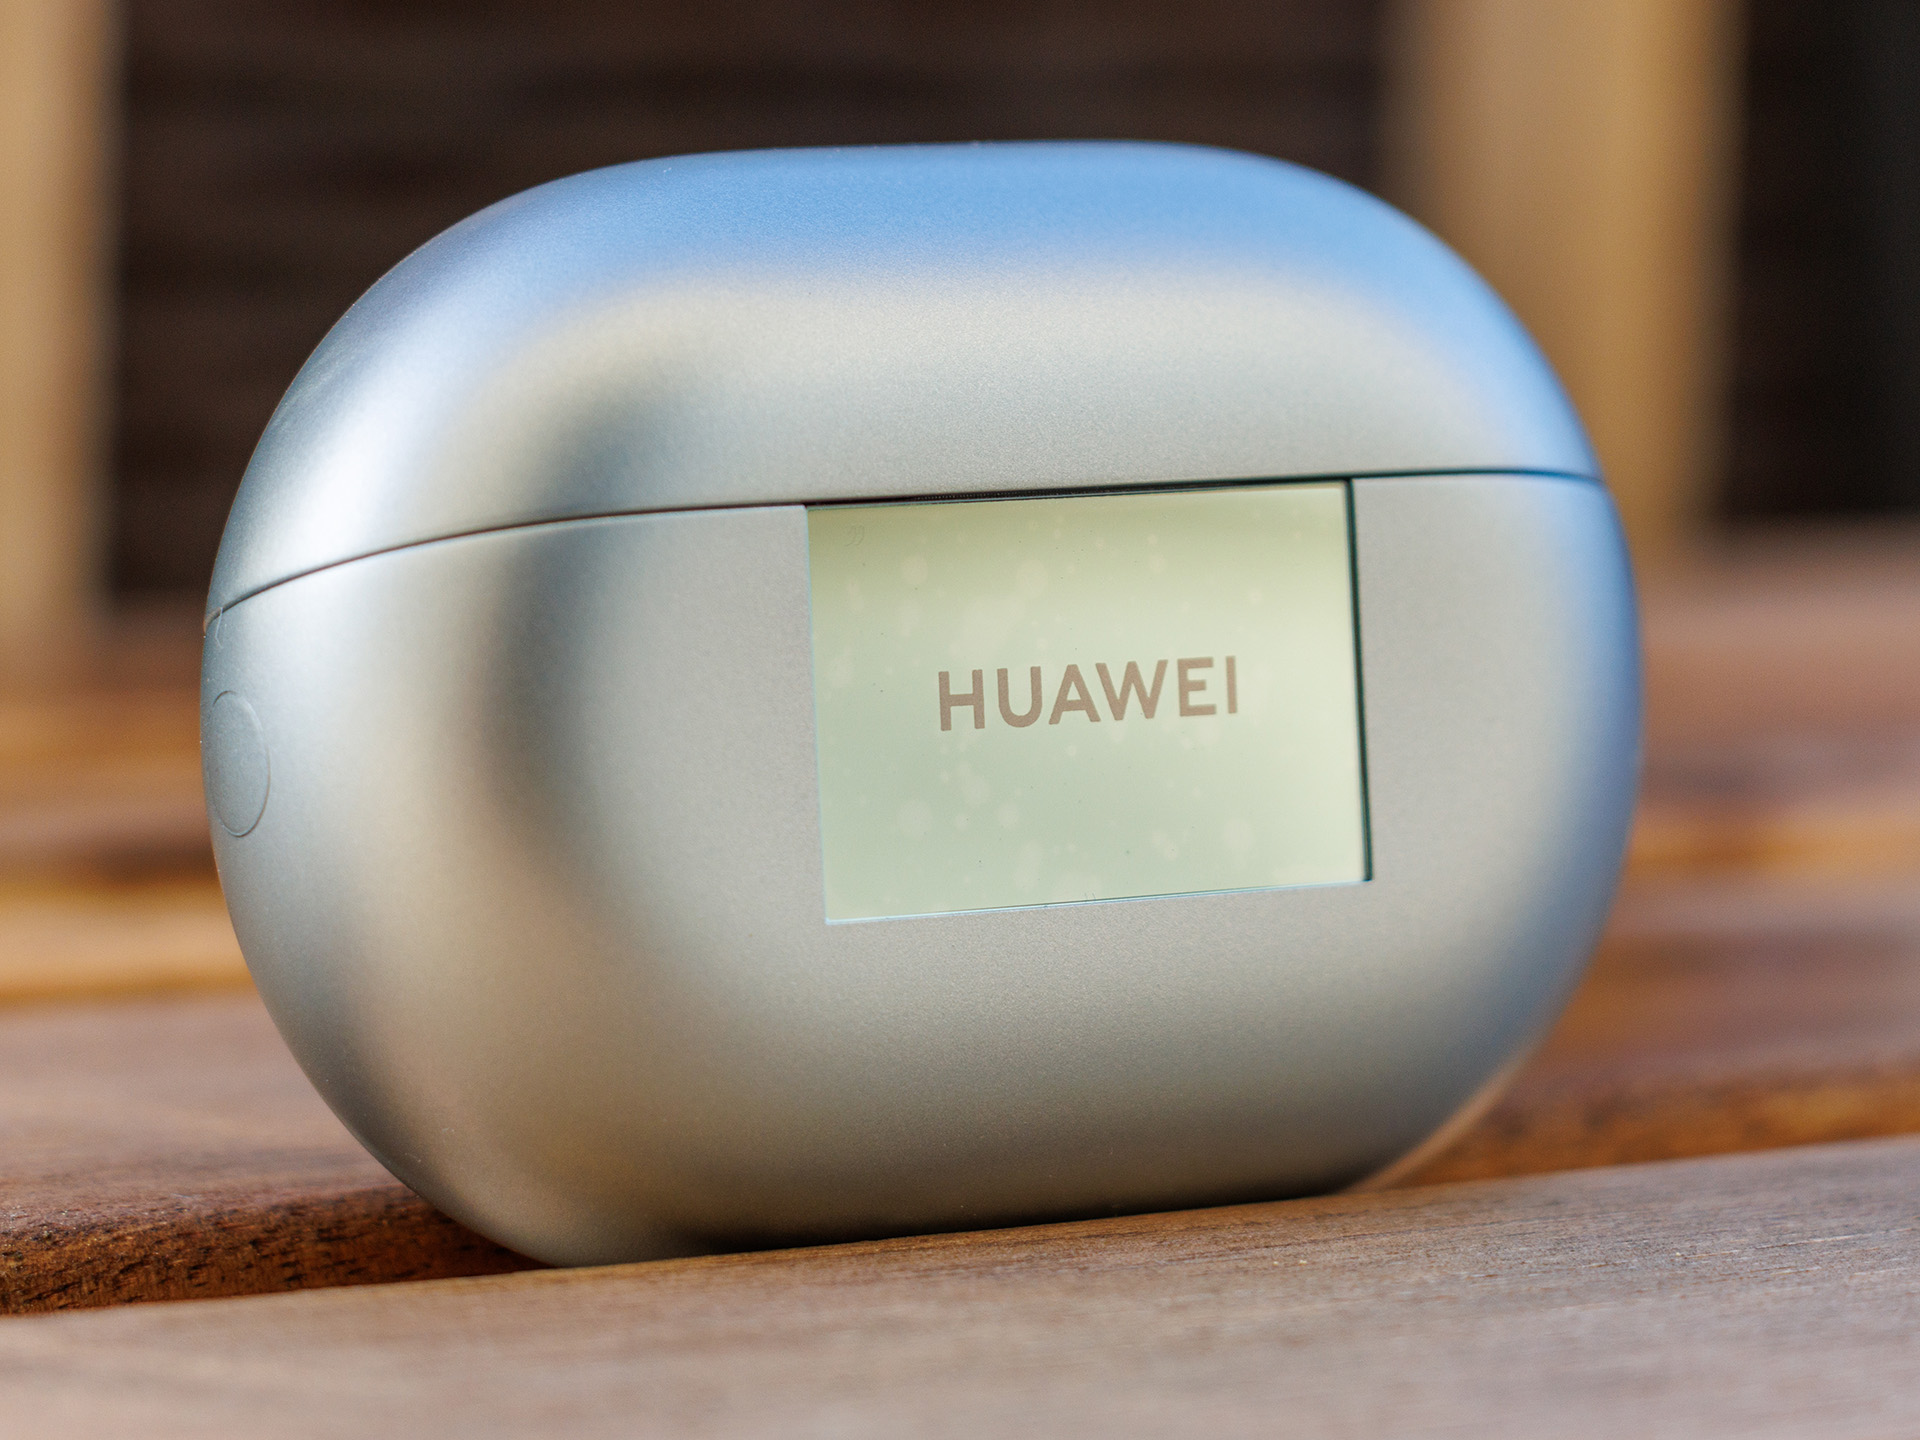 Huawei Freebuds Pro 3 review -  news